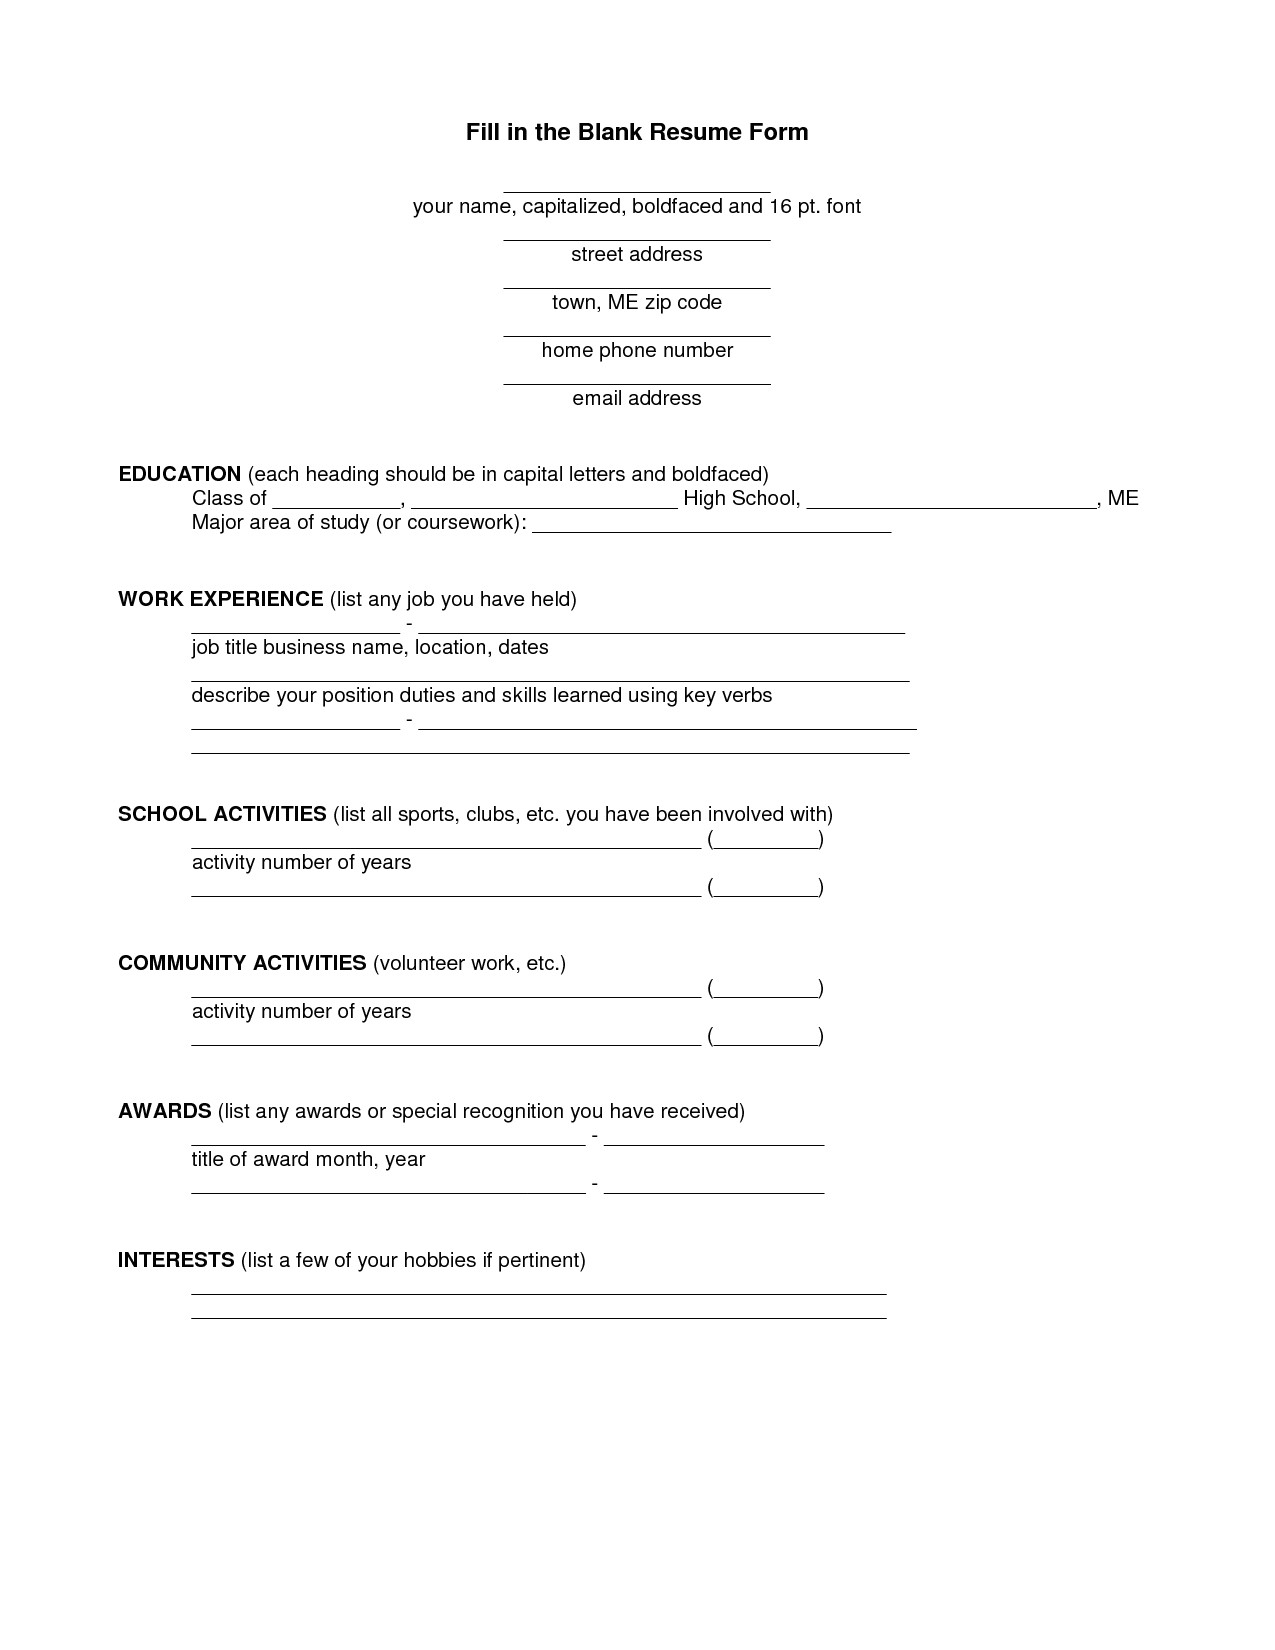 Fill In the Blank Resume Free Online 12 Best Images Of Printable Resume Worksheet Free